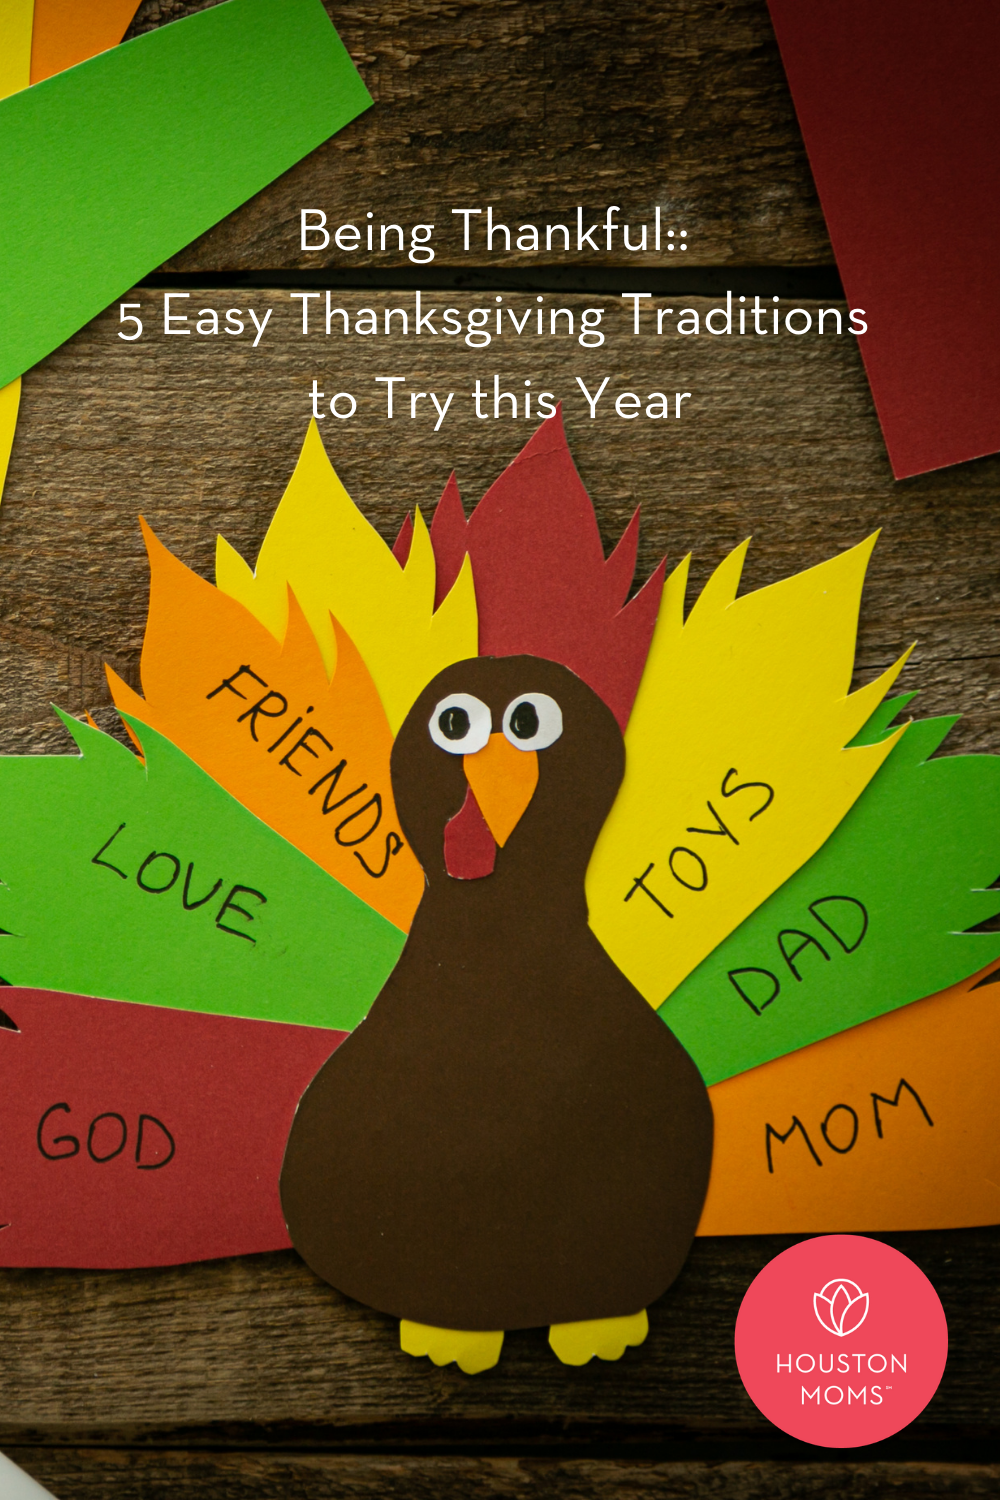 Houston Moms "Being Thankful:: 5 Easy Thanksgiving Traditions to Try this Year" #houstonmomsblog #momsaroundhouston #houstonmoms